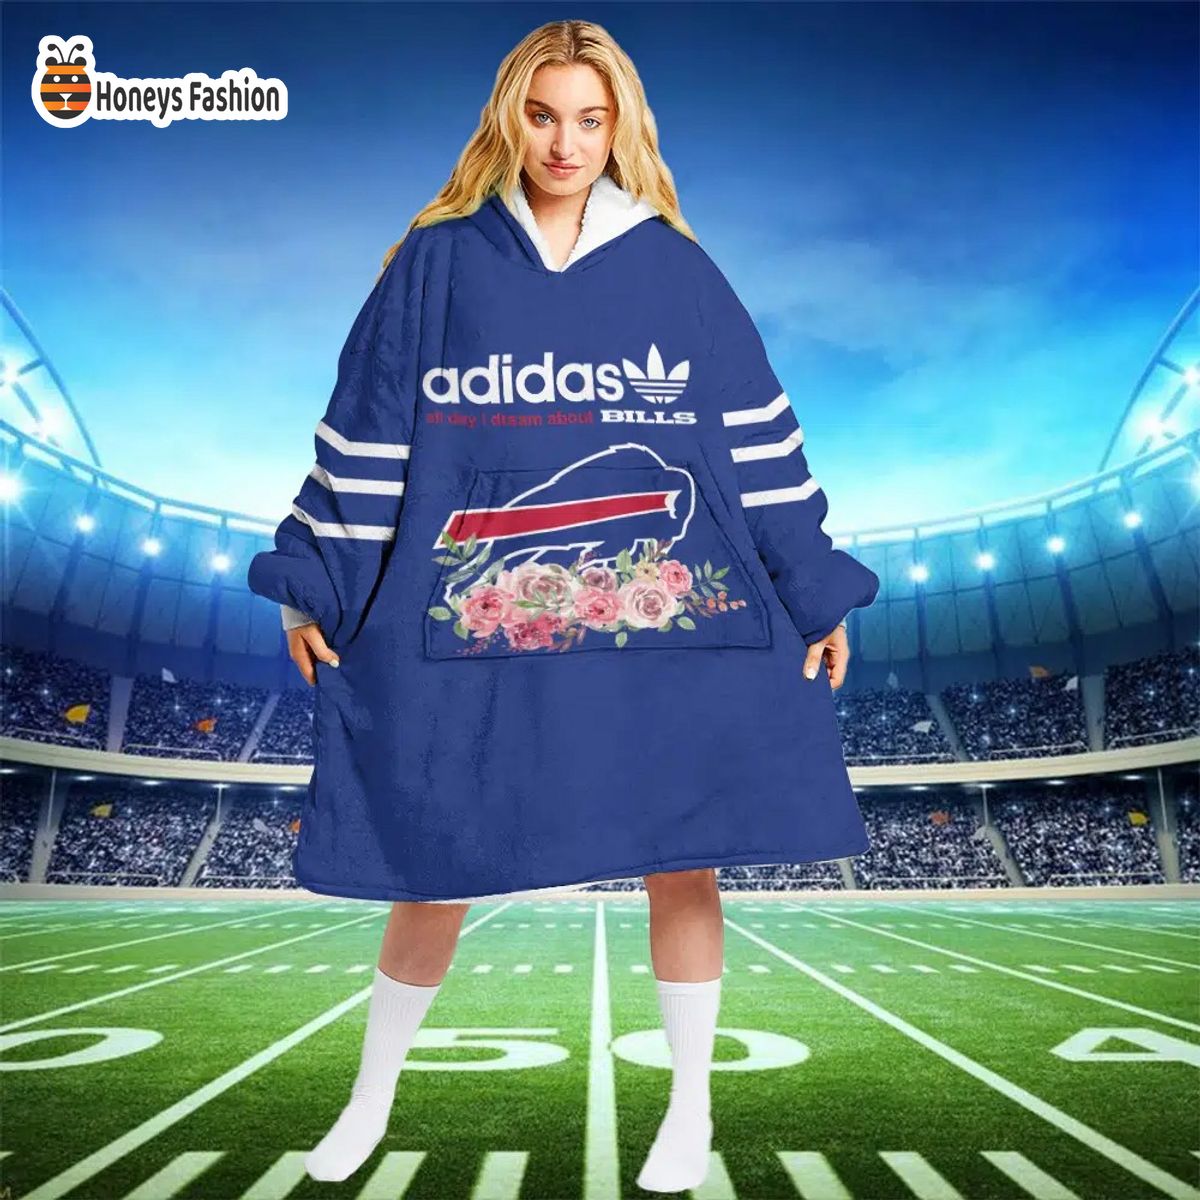 Buffalo Bills NFL Adidas all day i dream about Bills blanket hoodie